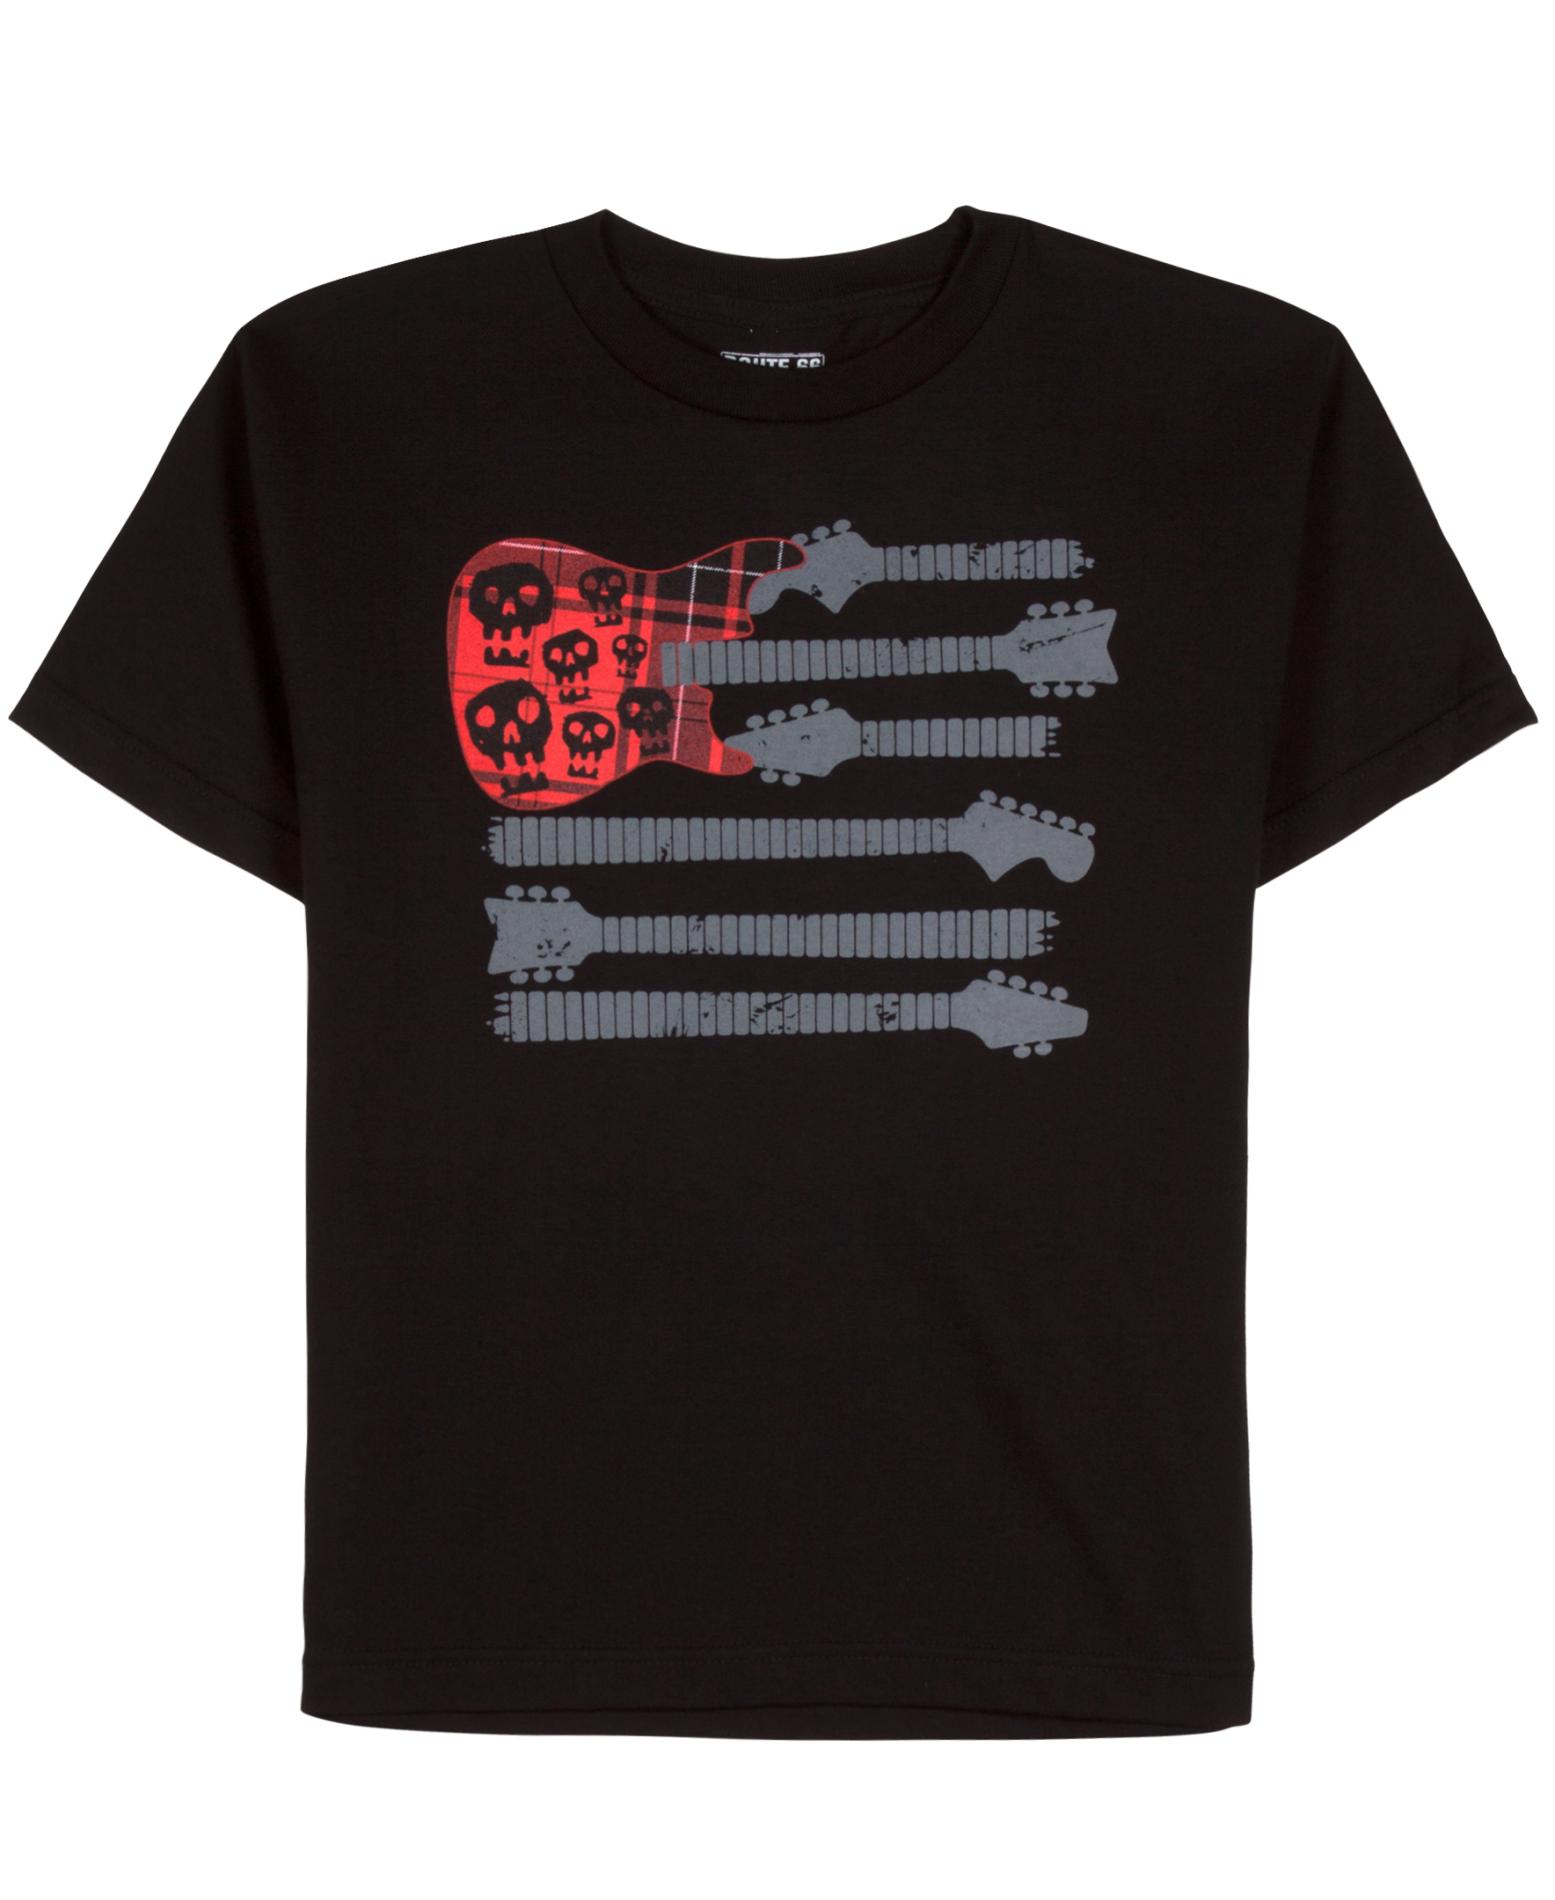 Route 66 Boy's Graphic T-Shirt - Guitars & Skulls